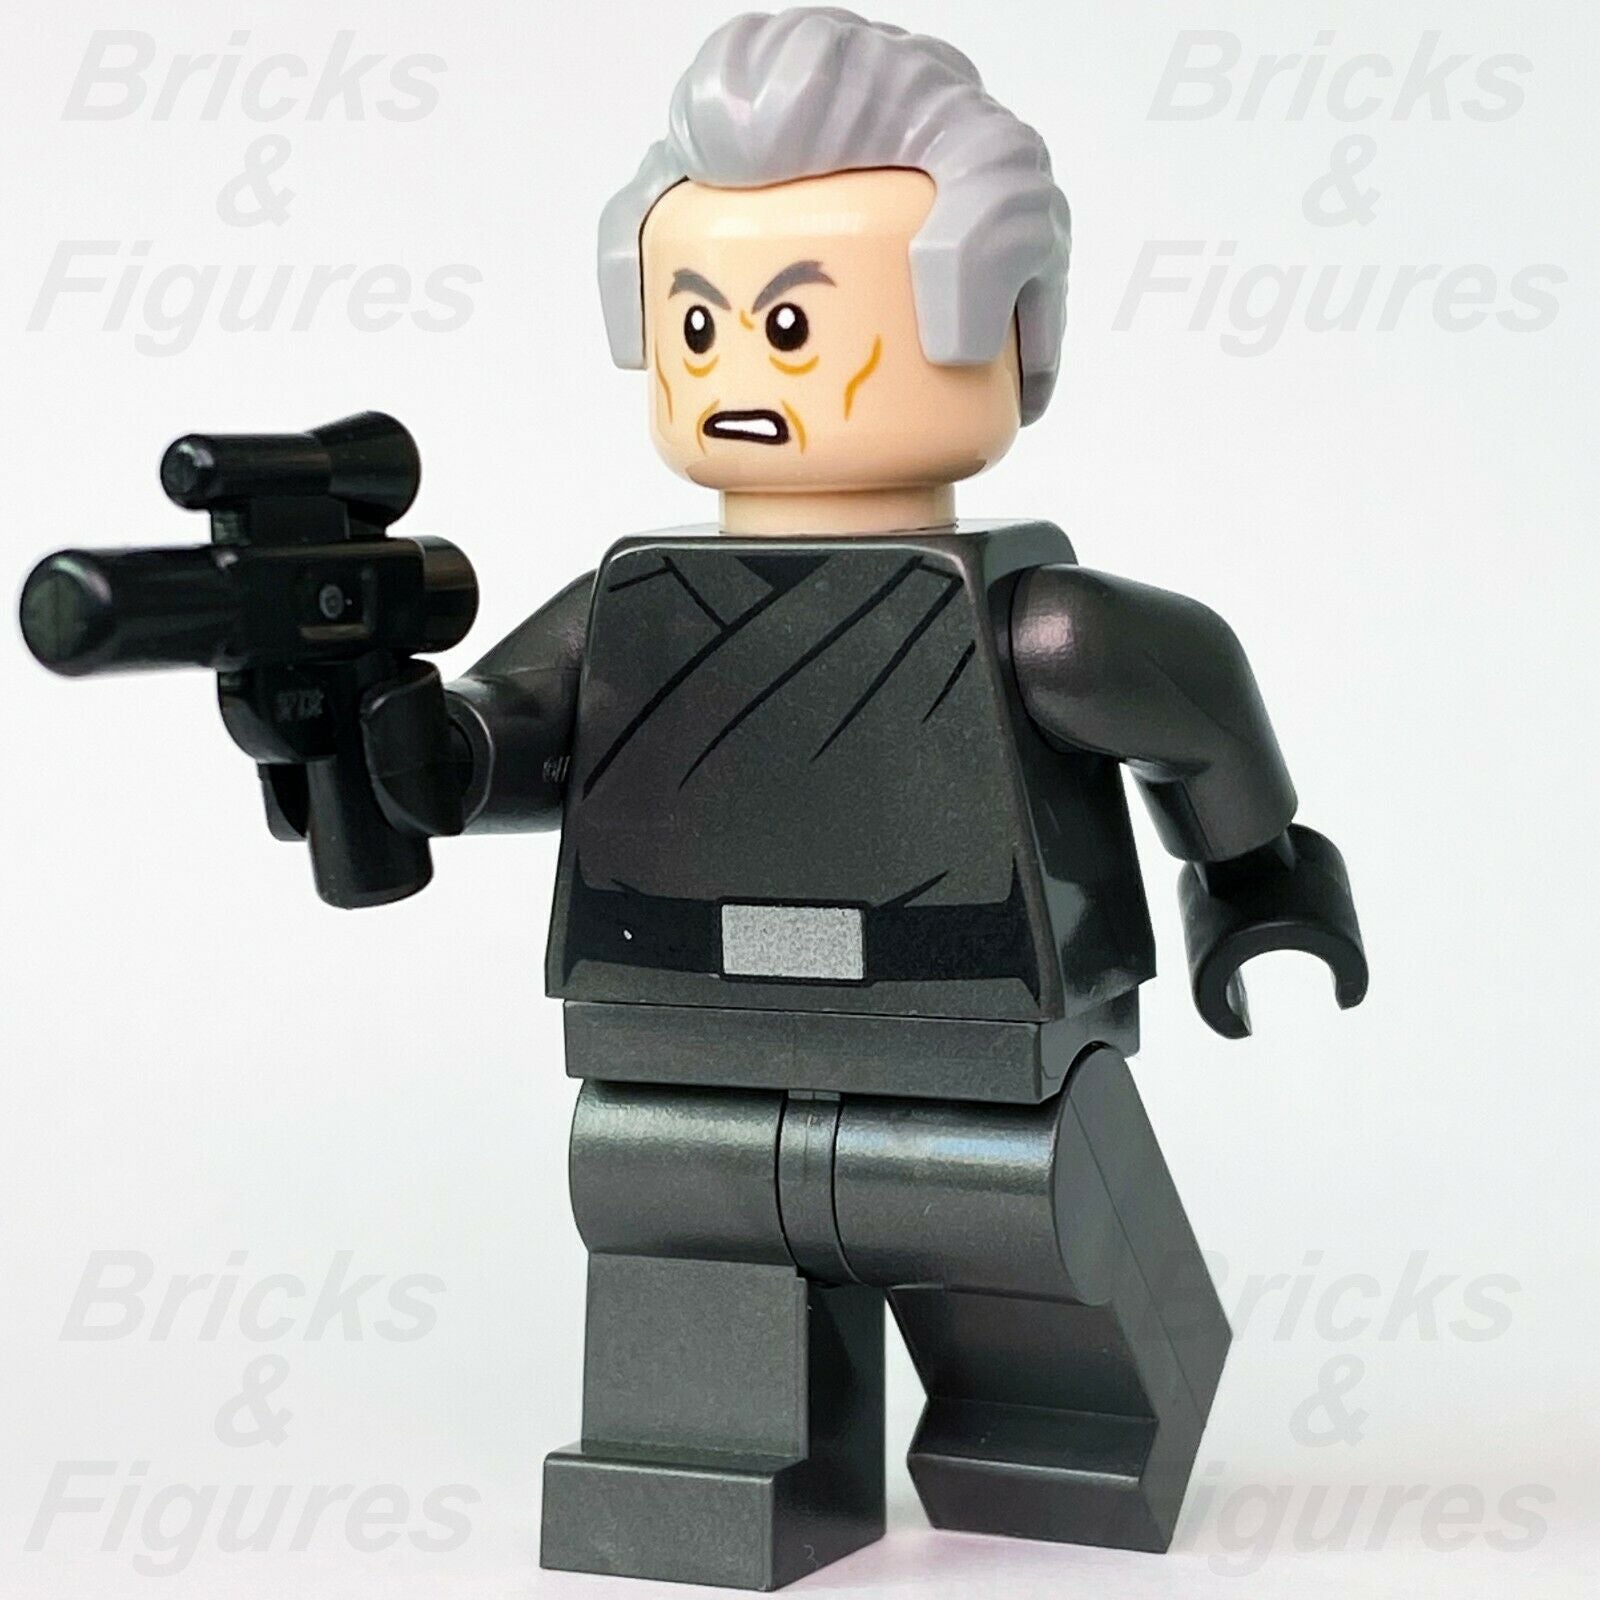 New Star Wars LEGO General Enric Pryde Imperial Officer Minifigure 75256 - Bricks & Figures